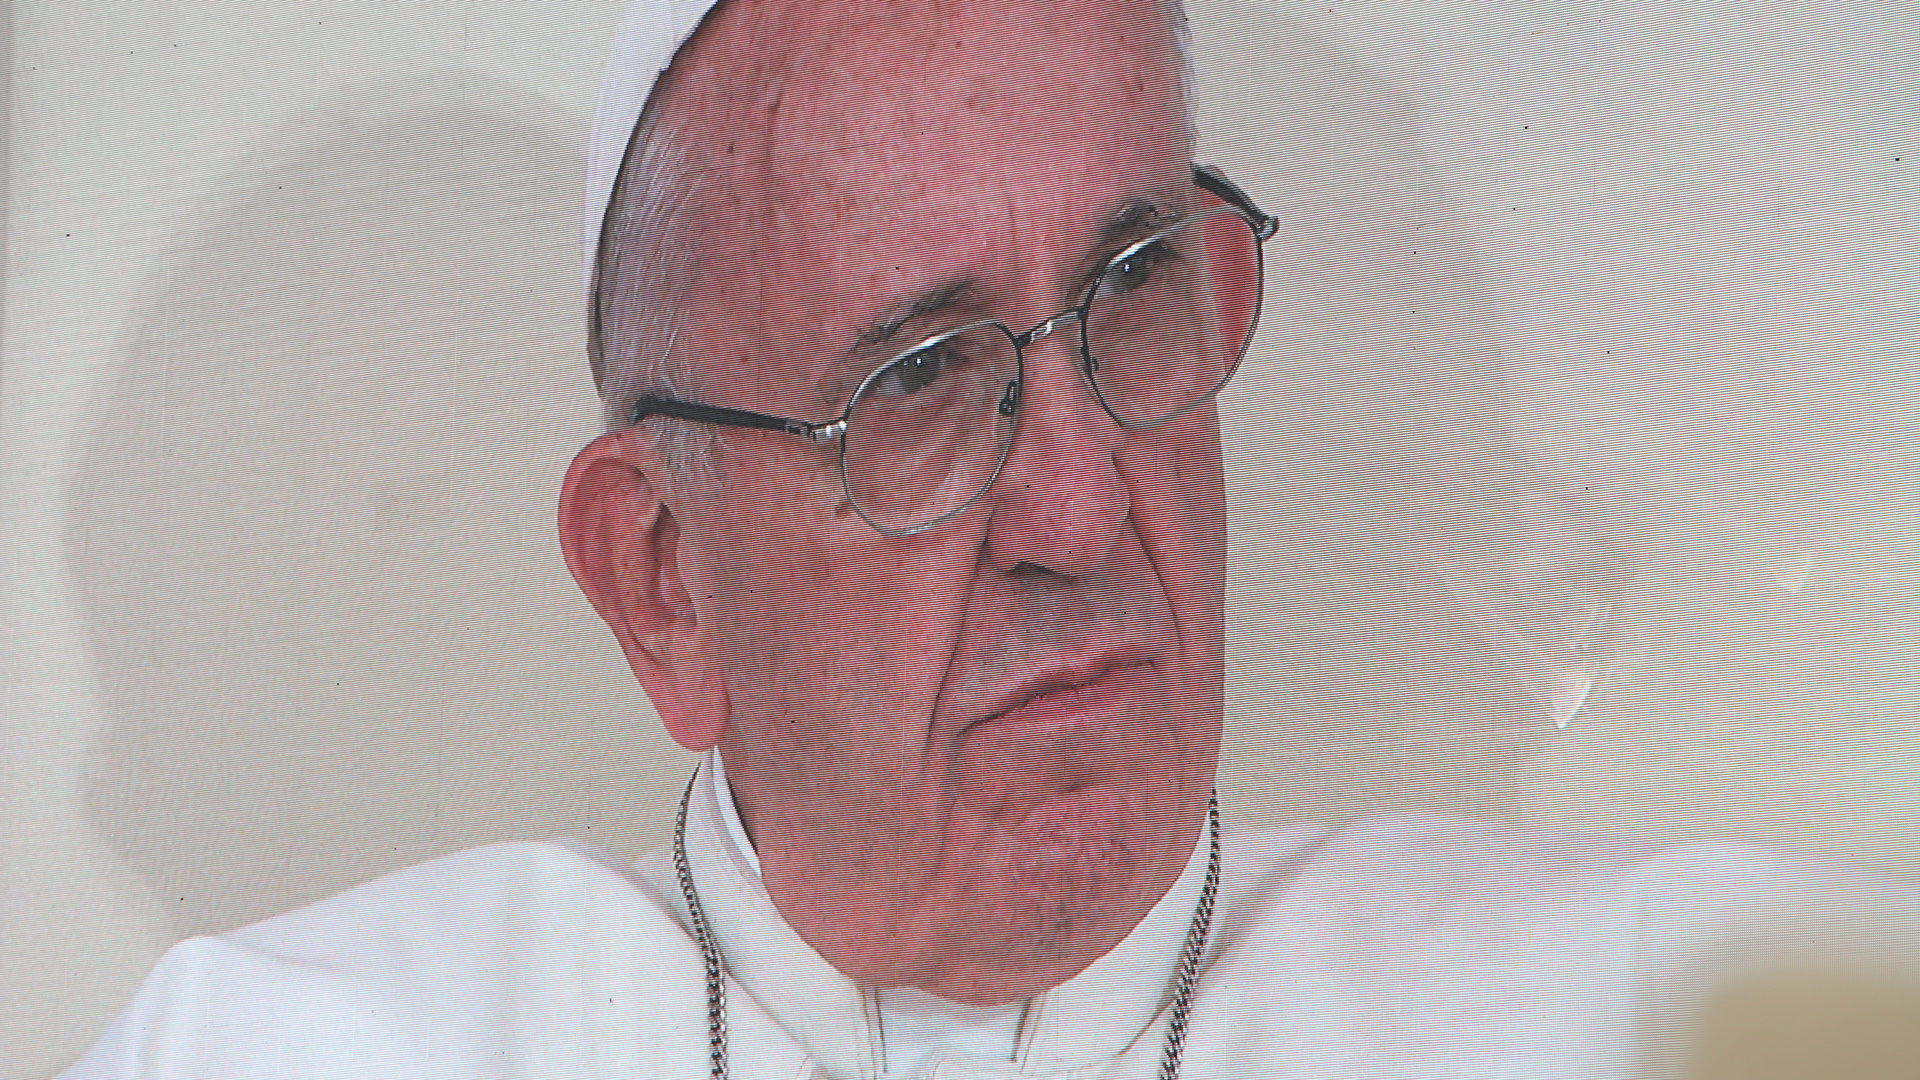 Le pape François met en garde contre le risque de "négocier" sa dignité. (Photo: Yohan Vallon)